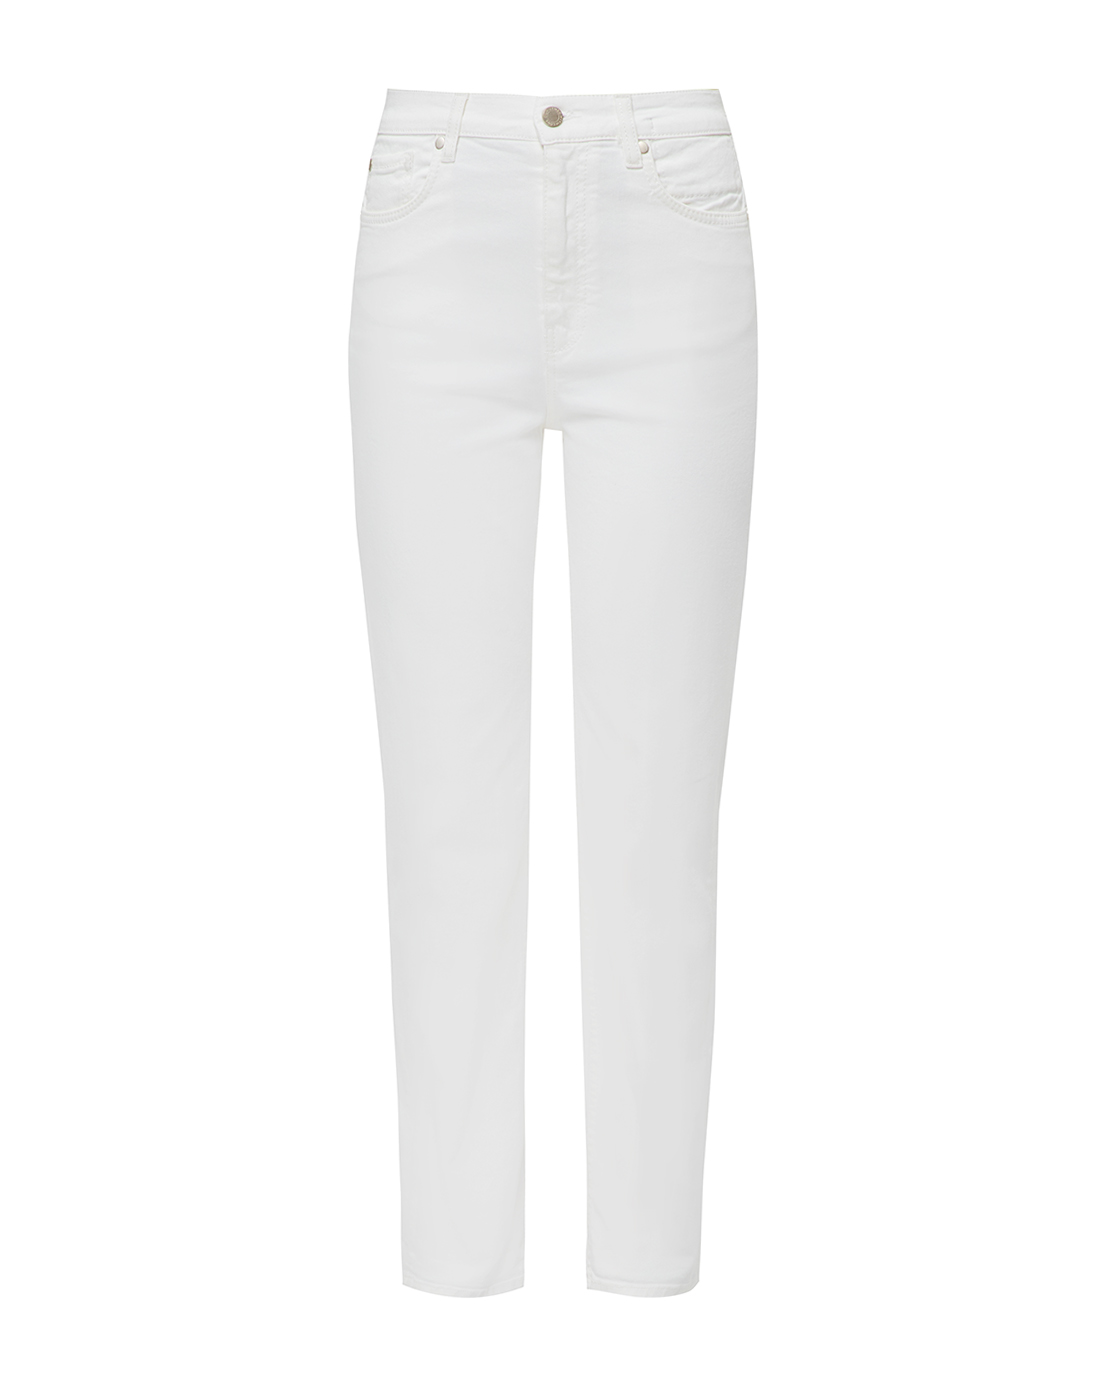 Женские белые брюки Dorothee Schumacher S445113/110-1